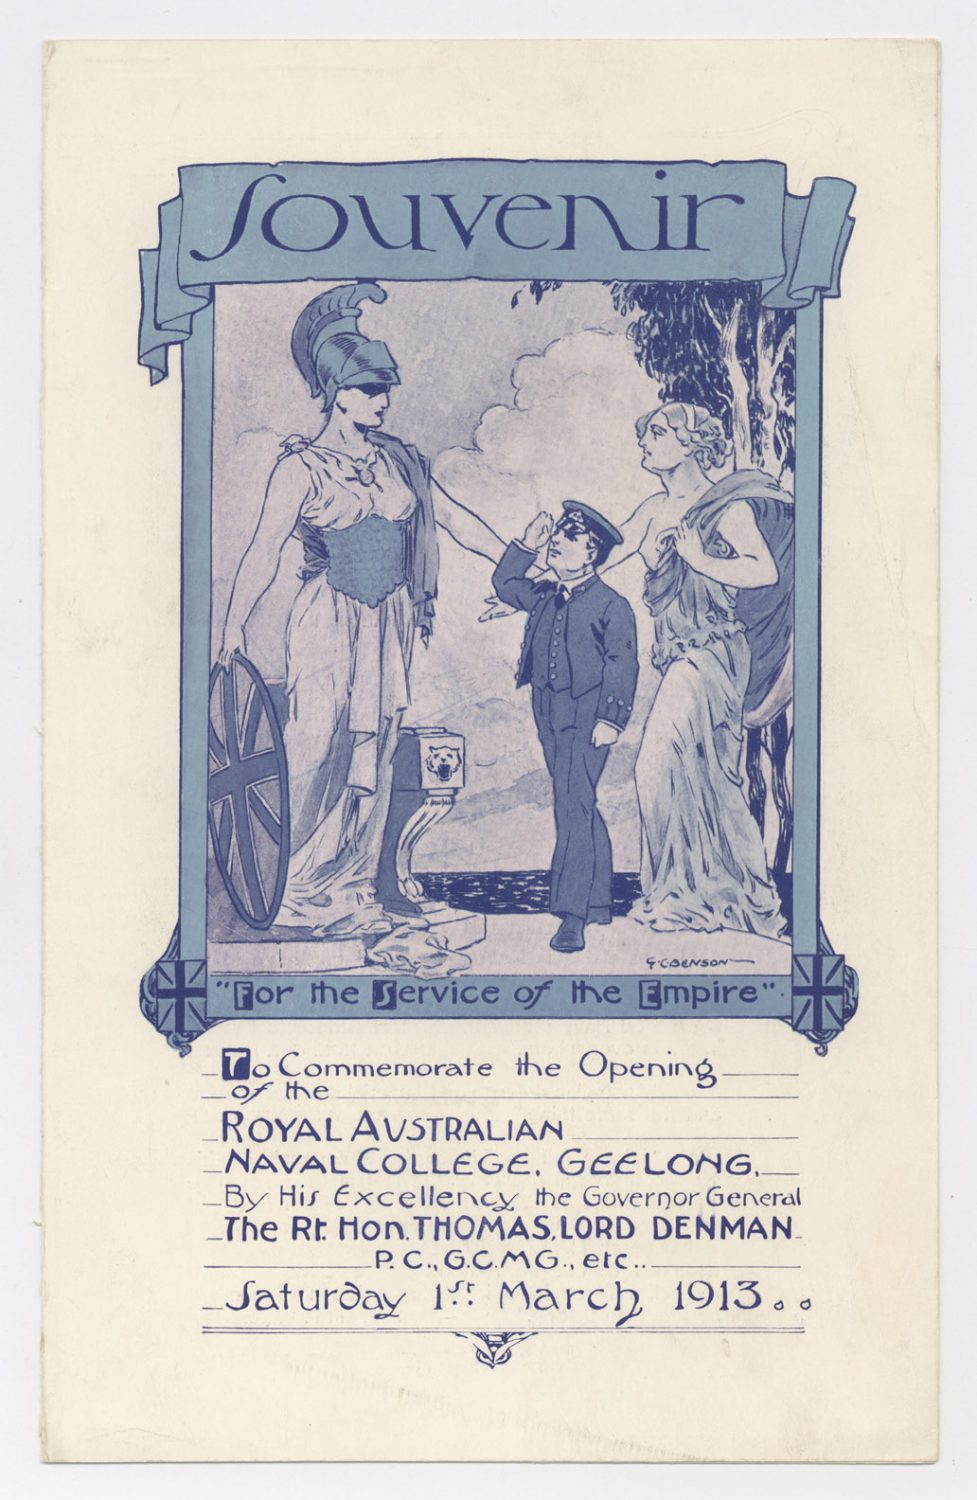 Two Osborne Houses - Naval Historical Society of Australia